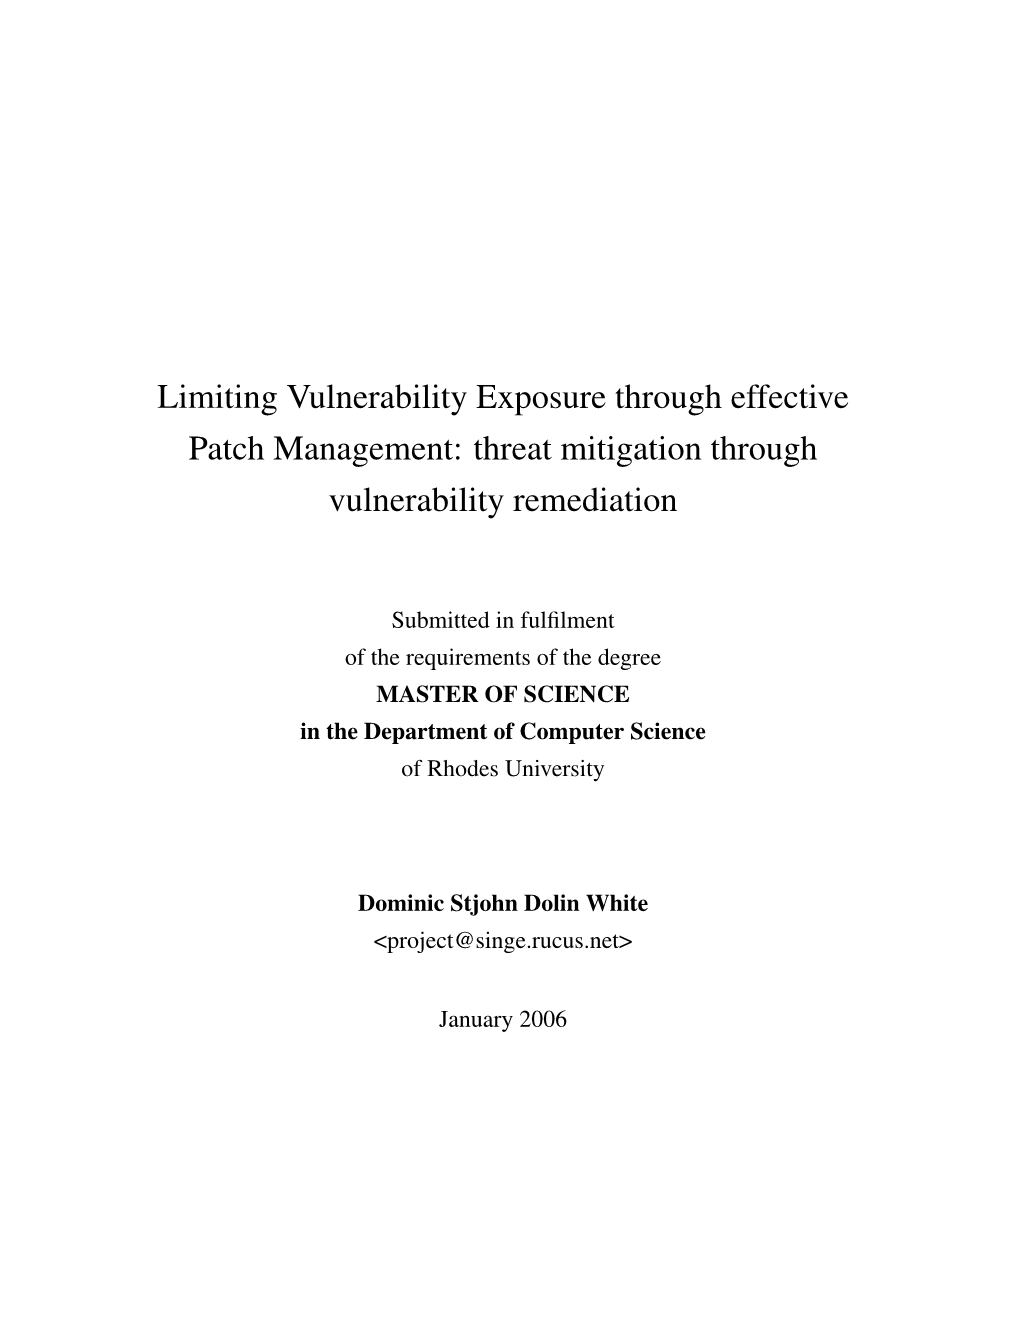 Limiting Vulnerability Exposure Through Effective Patch Management: Threat Mitigation Through Vulnerability Remediation